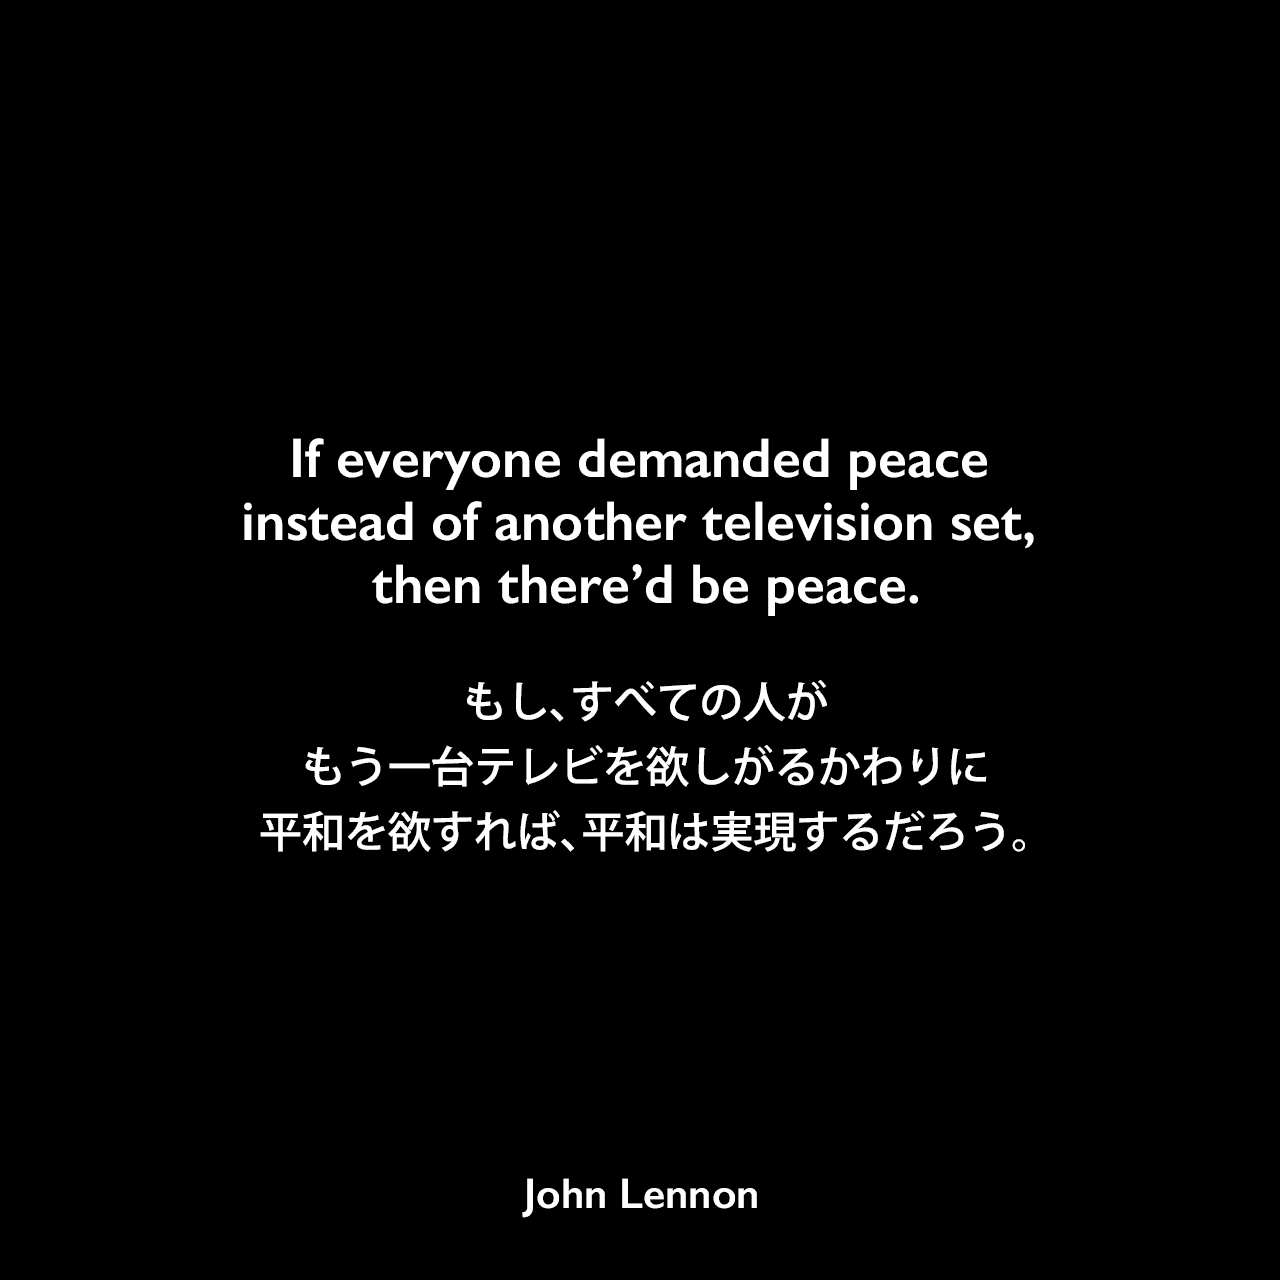 If everyone demanded peace instead of another television set, then there’d be peace.もし、すべての人がもう一台テレビを欲しがるかわりに、平和を欲すれば、平和は実現するだろう。- 1969年に行われた平和活動パフォーマンス「ベッド・イン（Bed In）」よりJohn Lennon